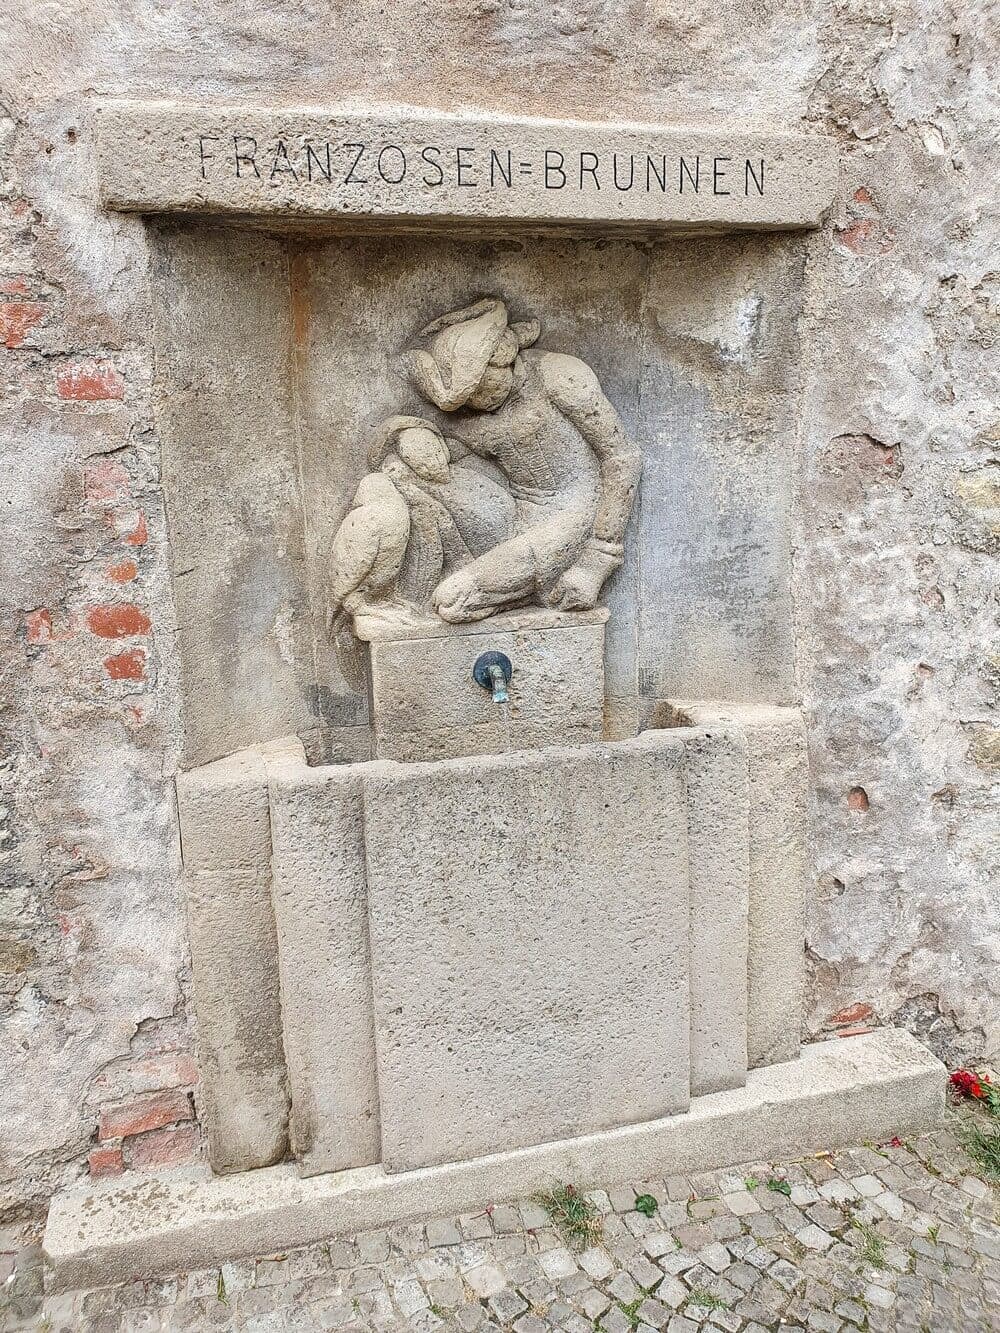 Franzosenbrunnen in Merseburg